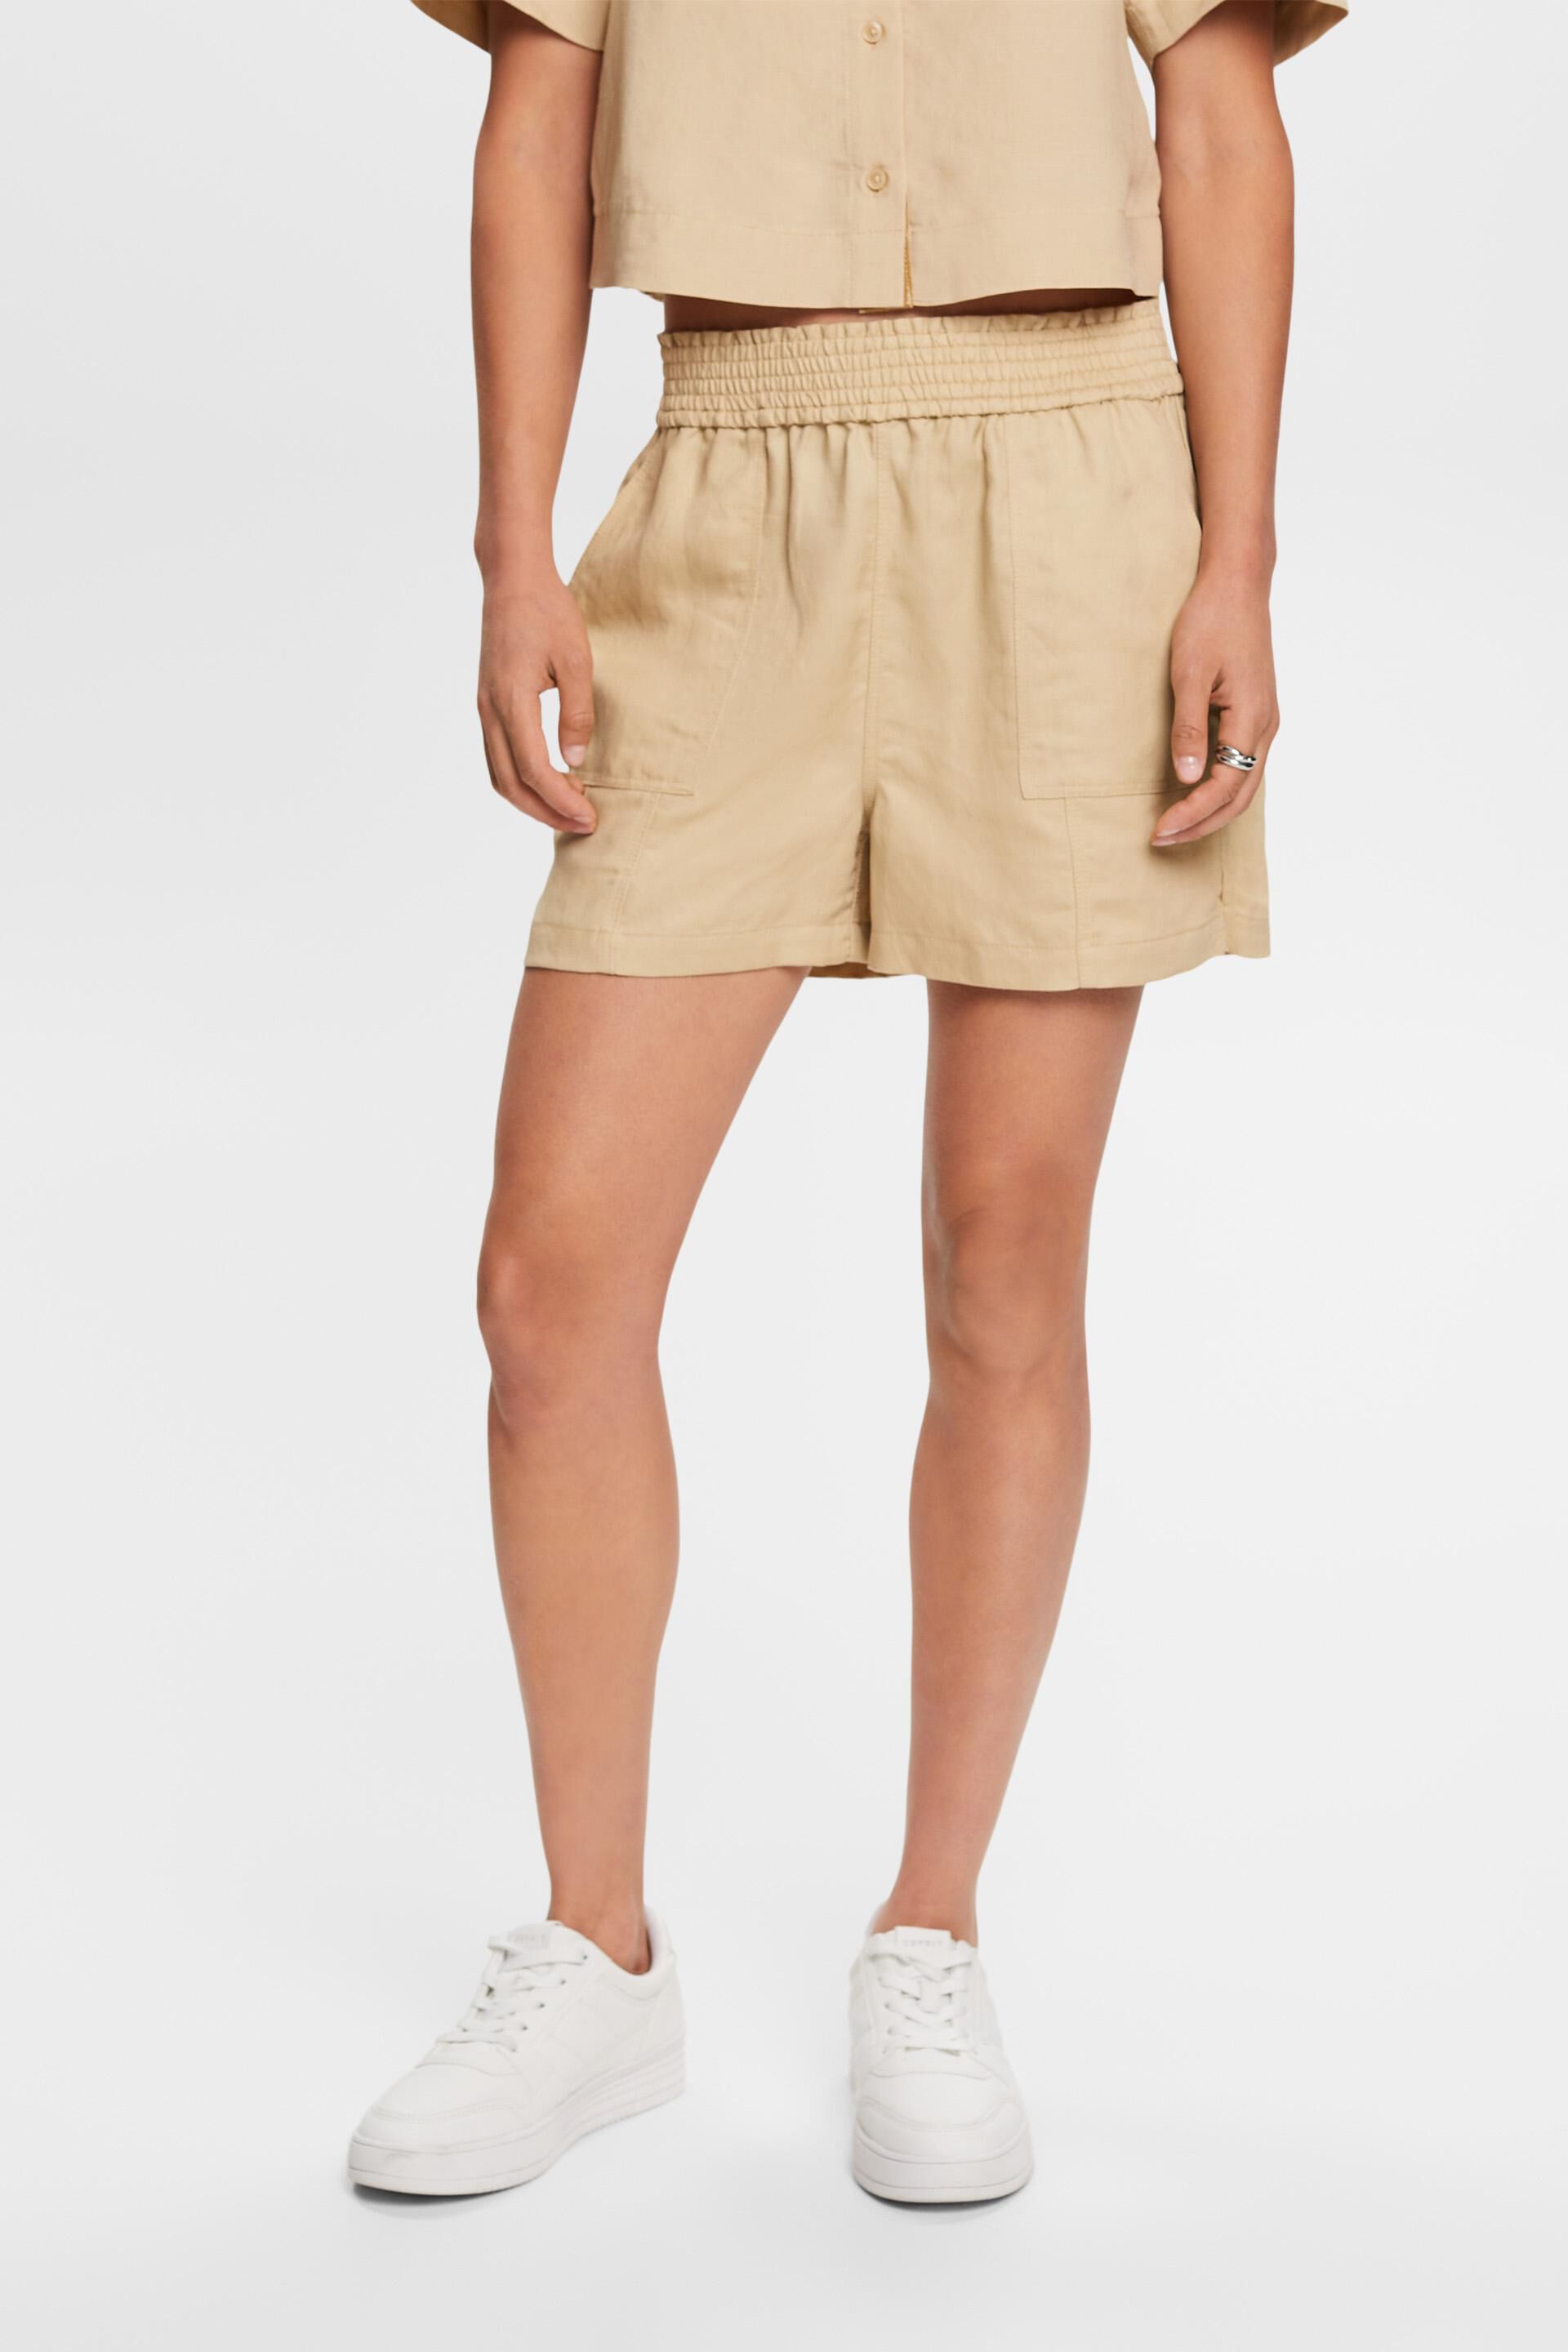 Esprit linen Pull-on shorts, blend